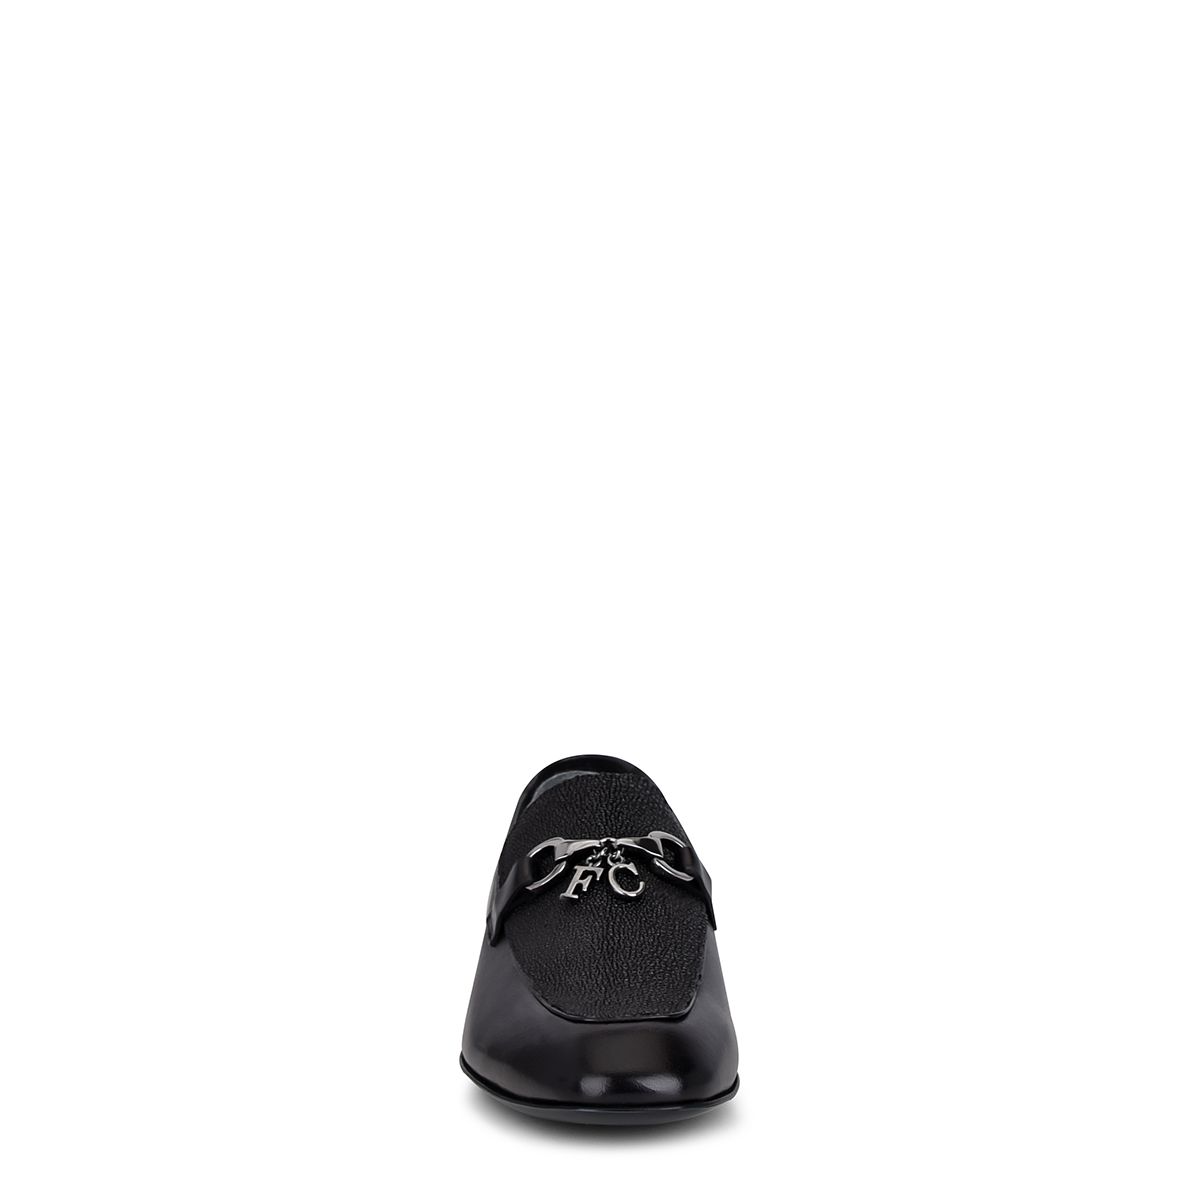 S46MTTS - Cuadra black dress casual stingray bit loafer for women-FRANCO CUADRA-Kuet-Cuadra-Boots